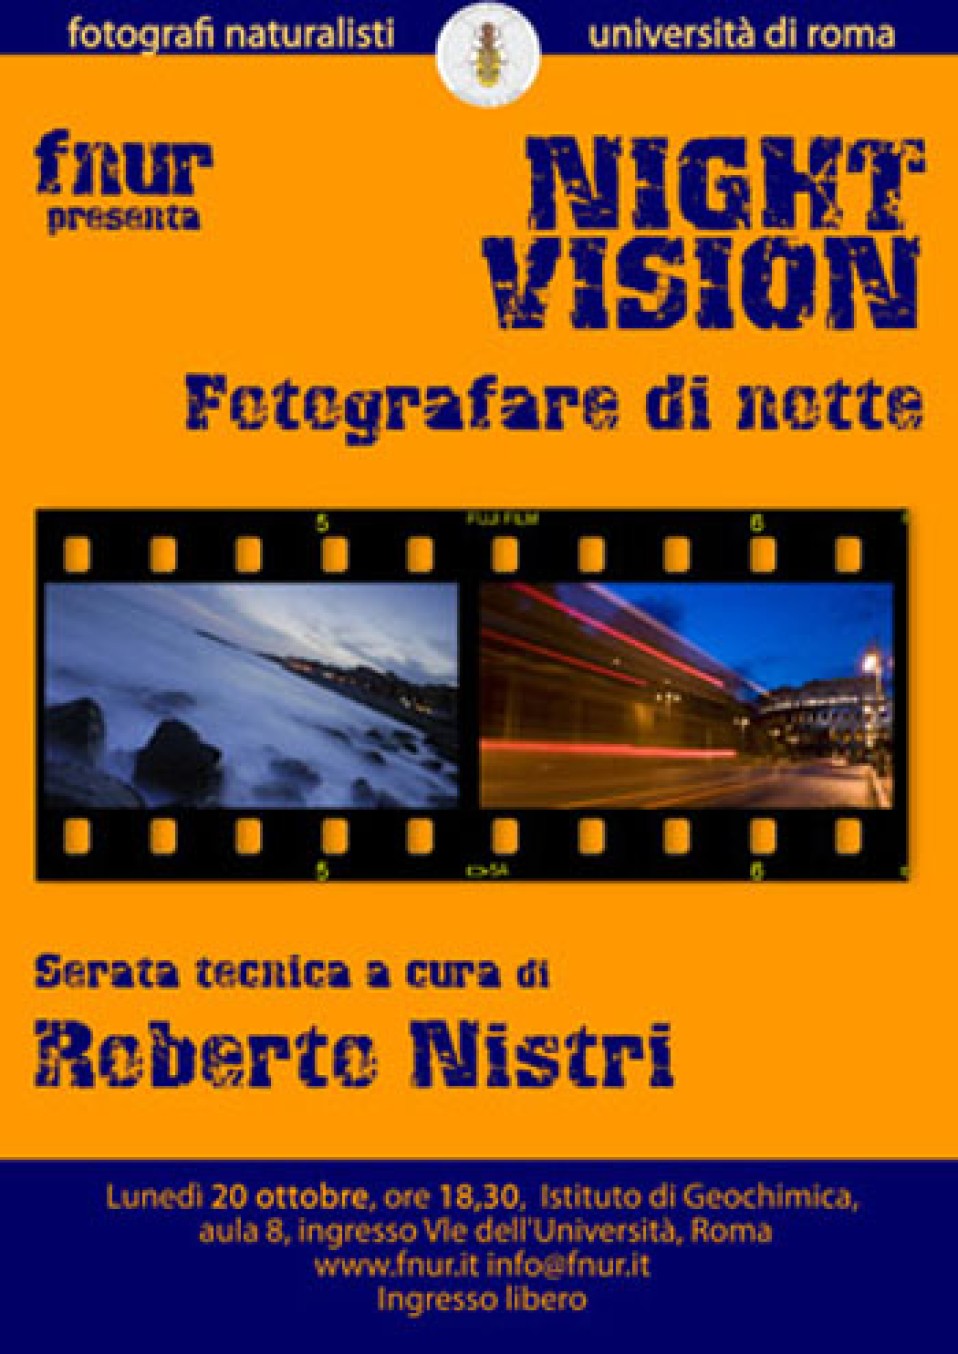 Night Vision – Roberto Nistri